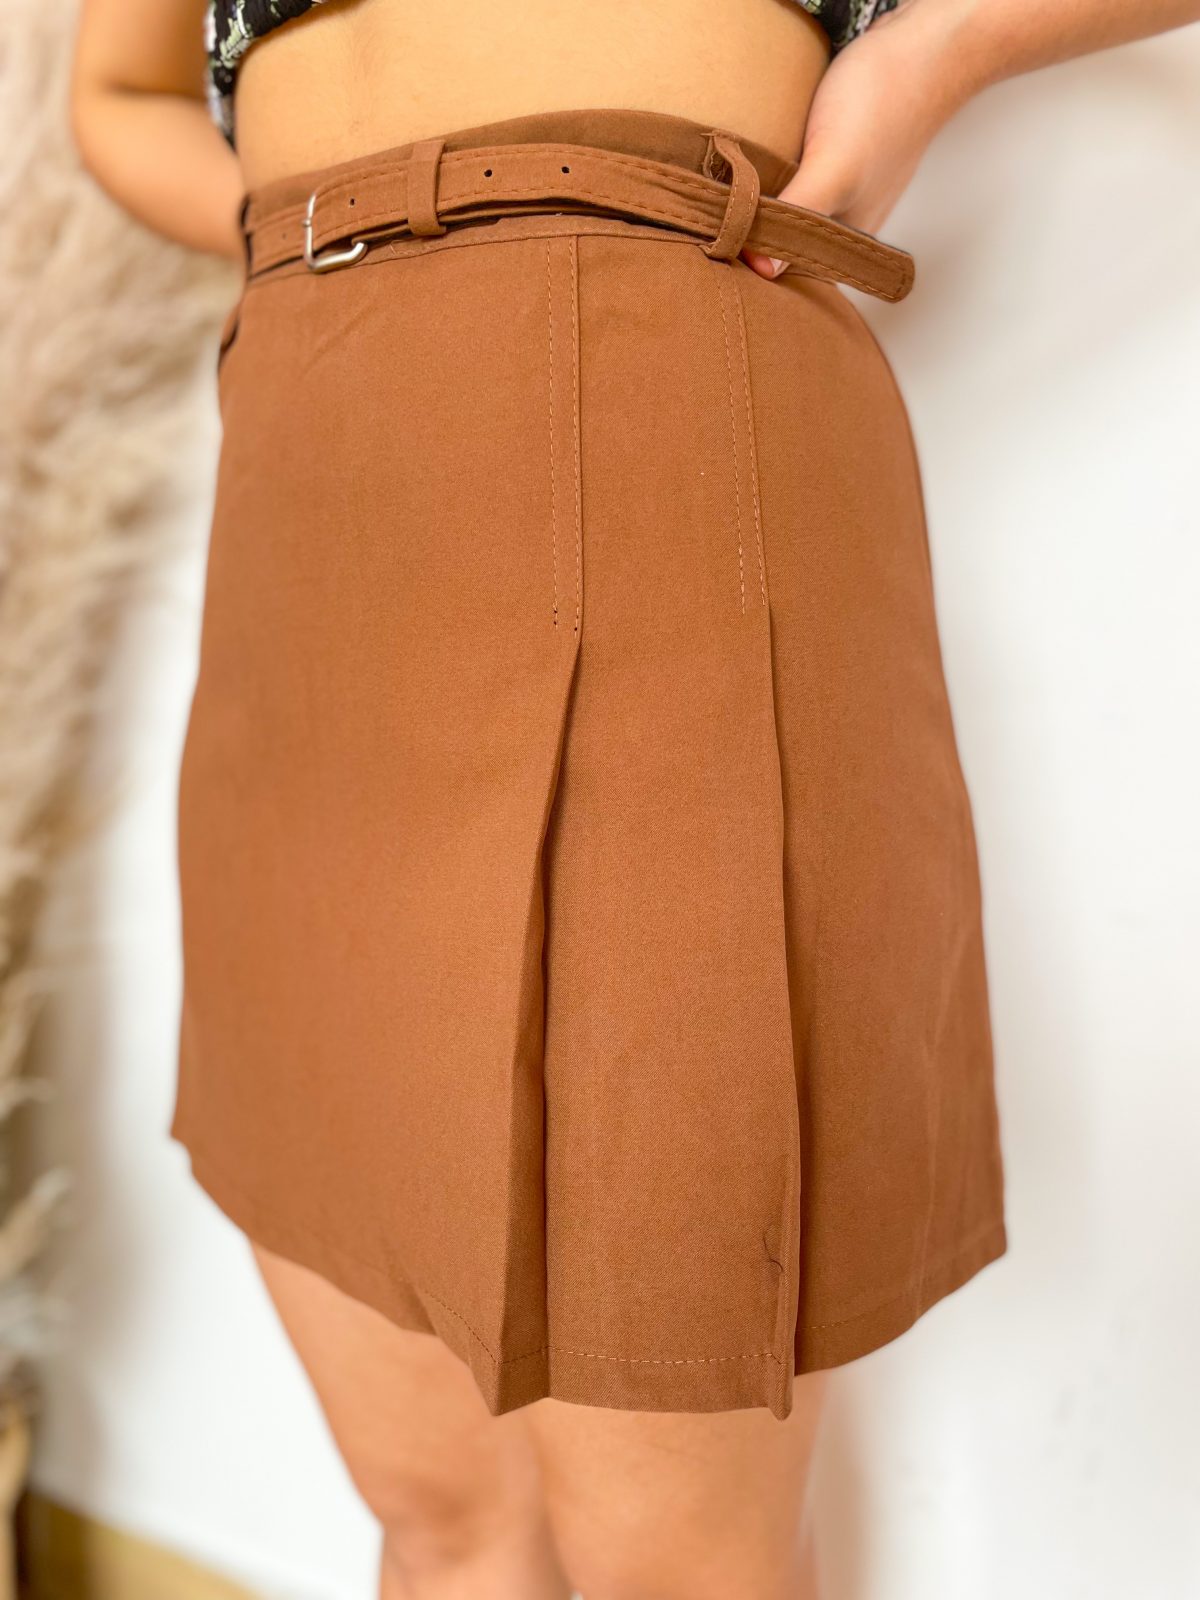 falda corta café tela gamuza con pliegues - ecuador - ropa gallardo